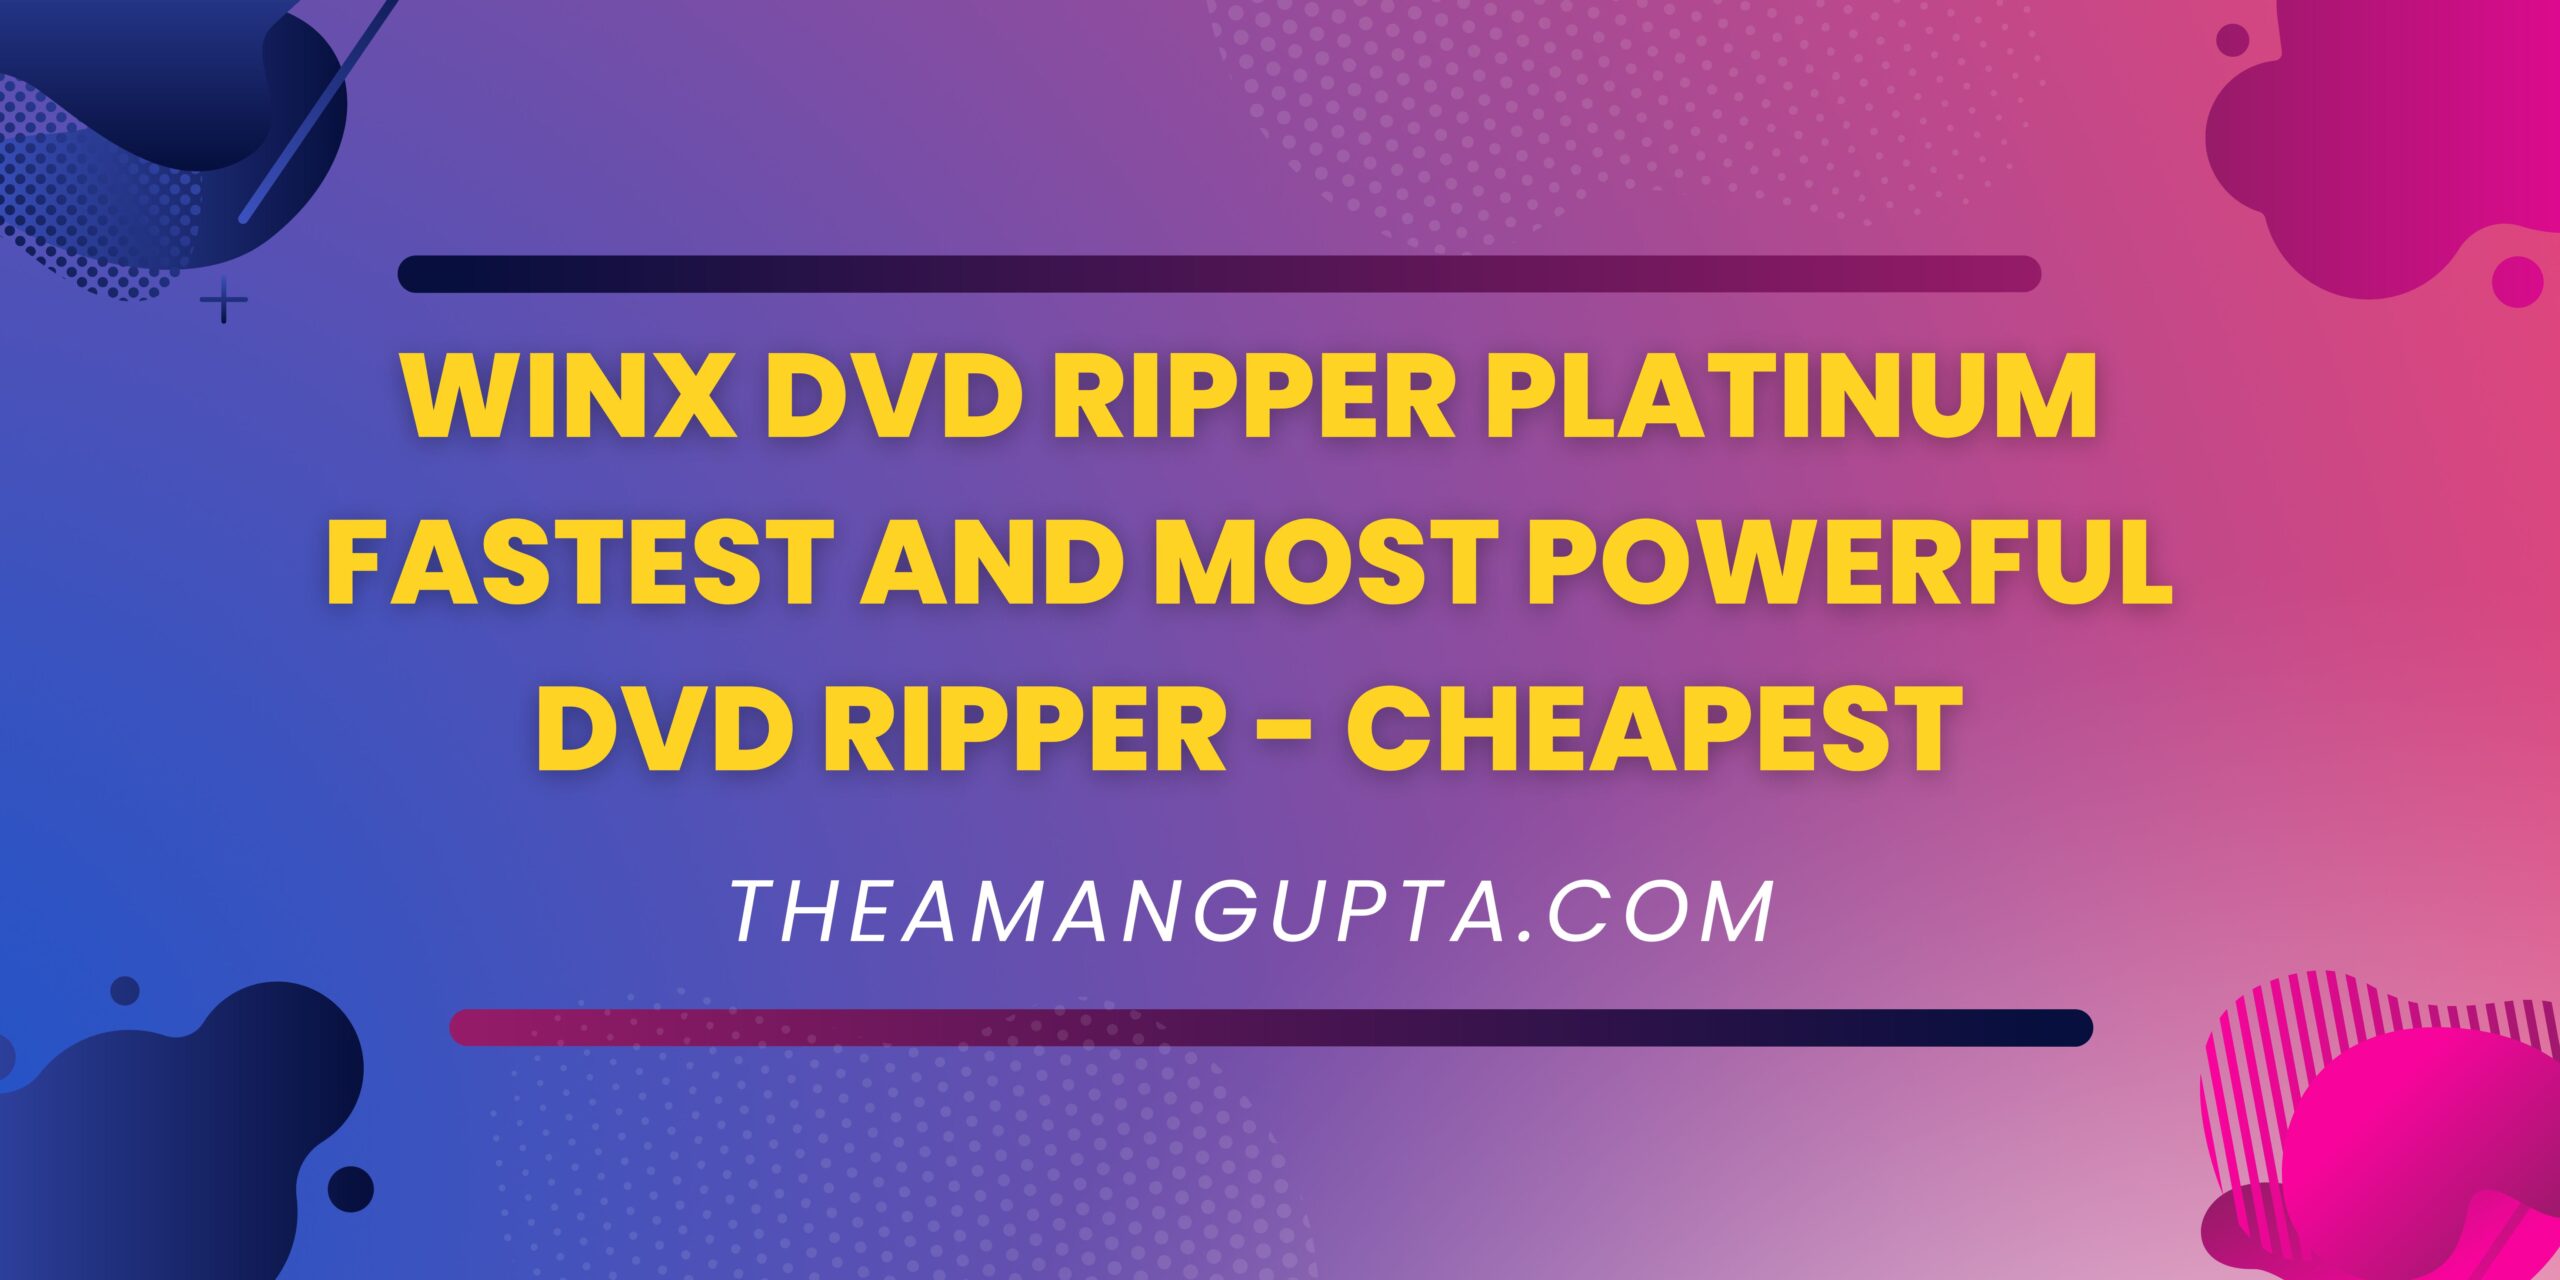 WinX DVD Ripper Platinum Fastest and Most Powerful DVD Ripper - Cheapest|DVD Ripper|Theamangupta|Theamangupta